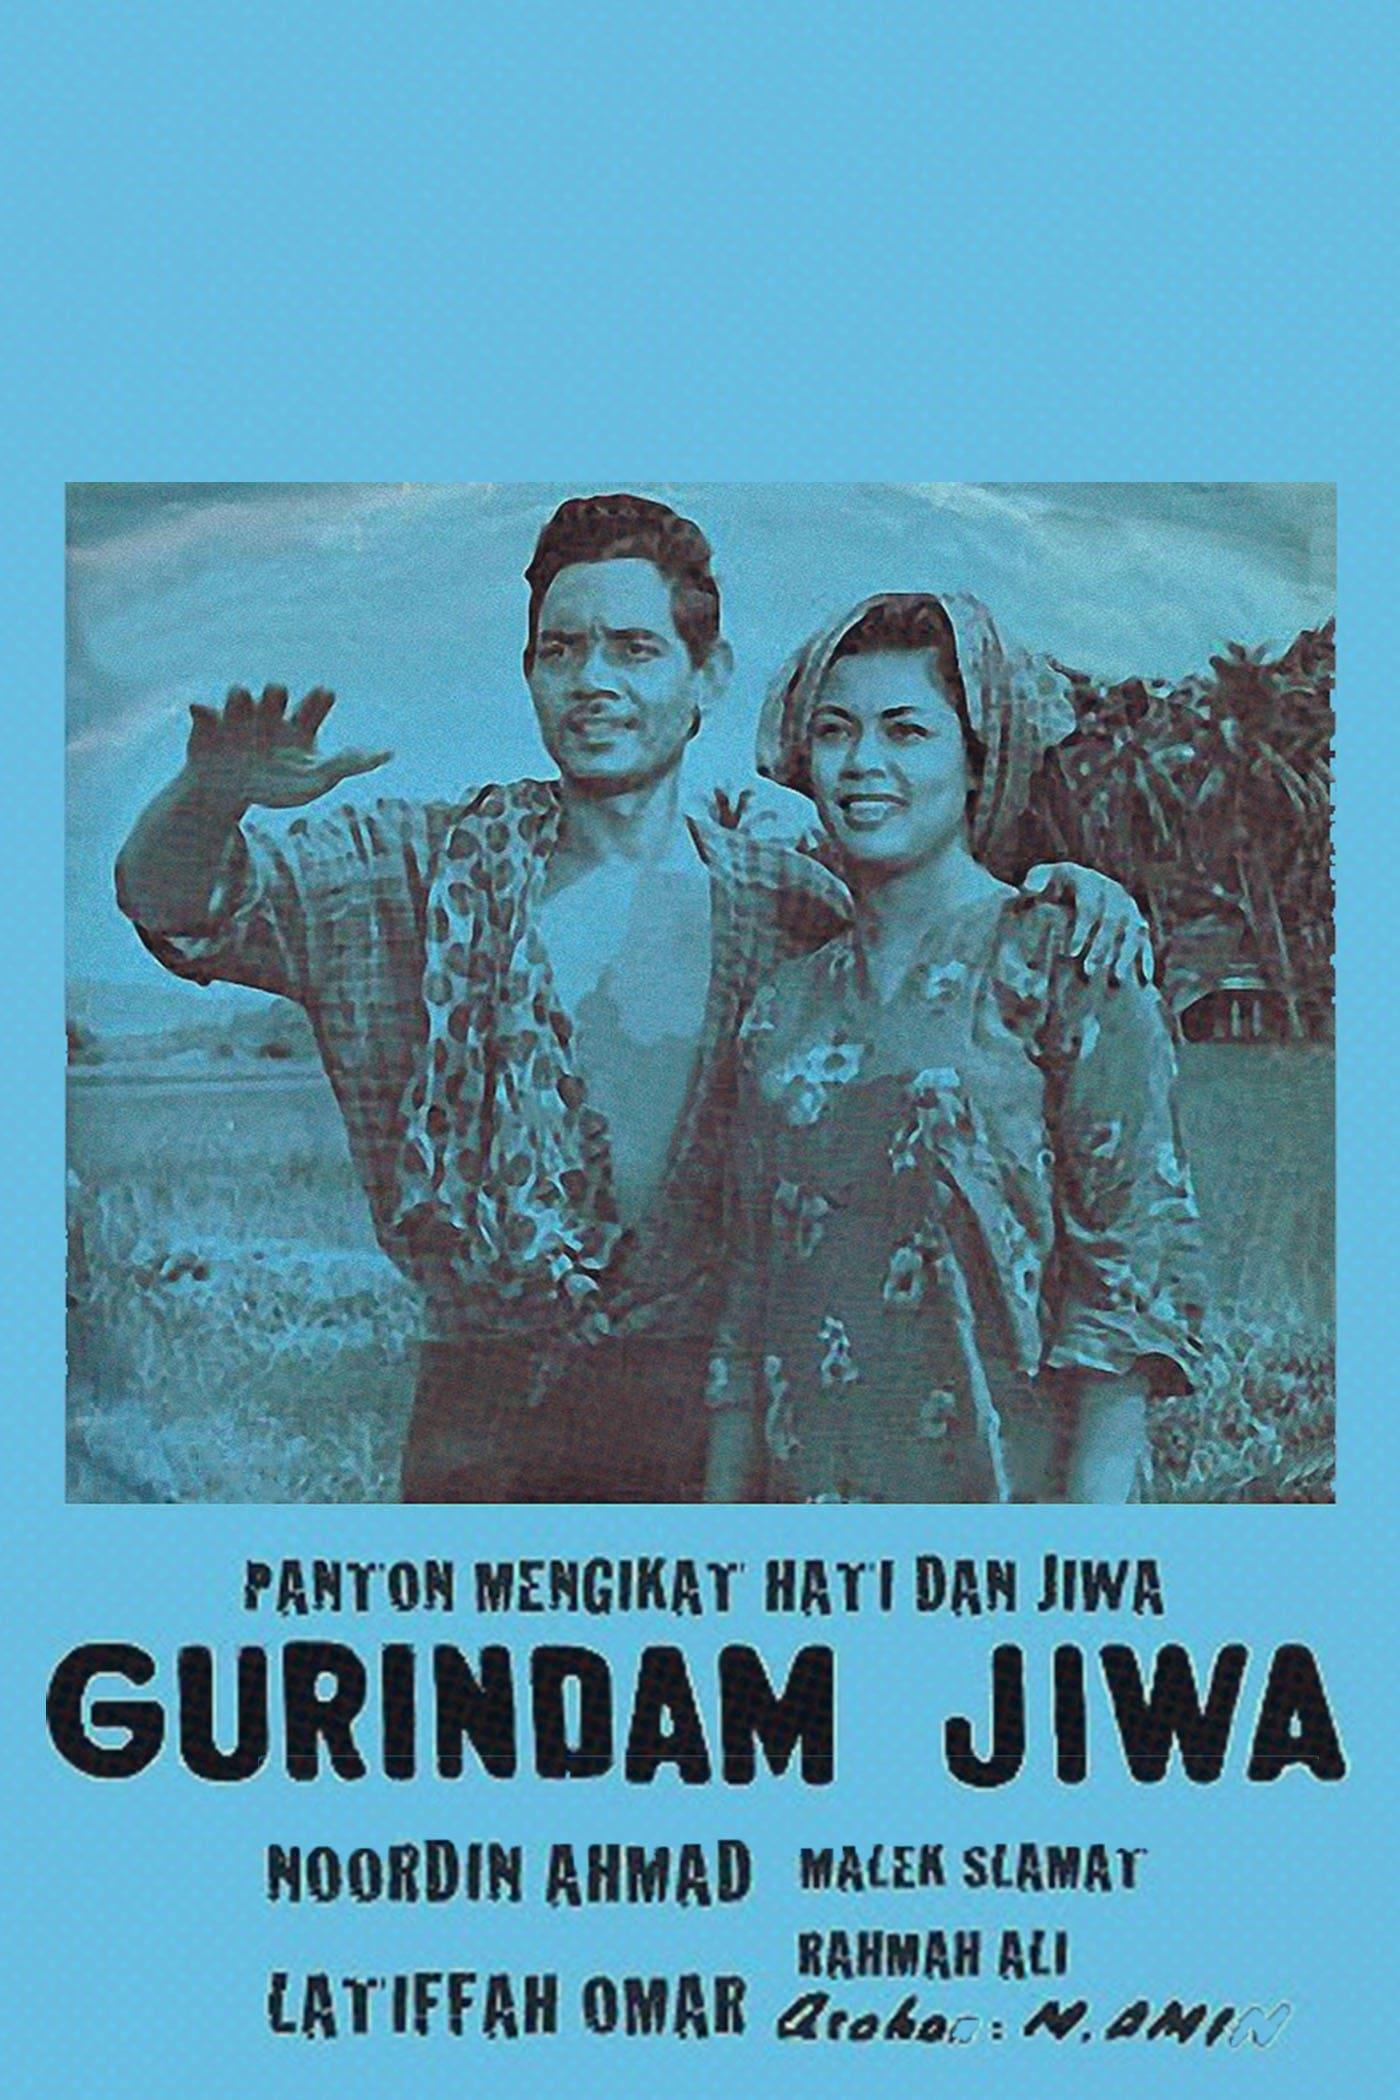 Gurindam Jiwa poster